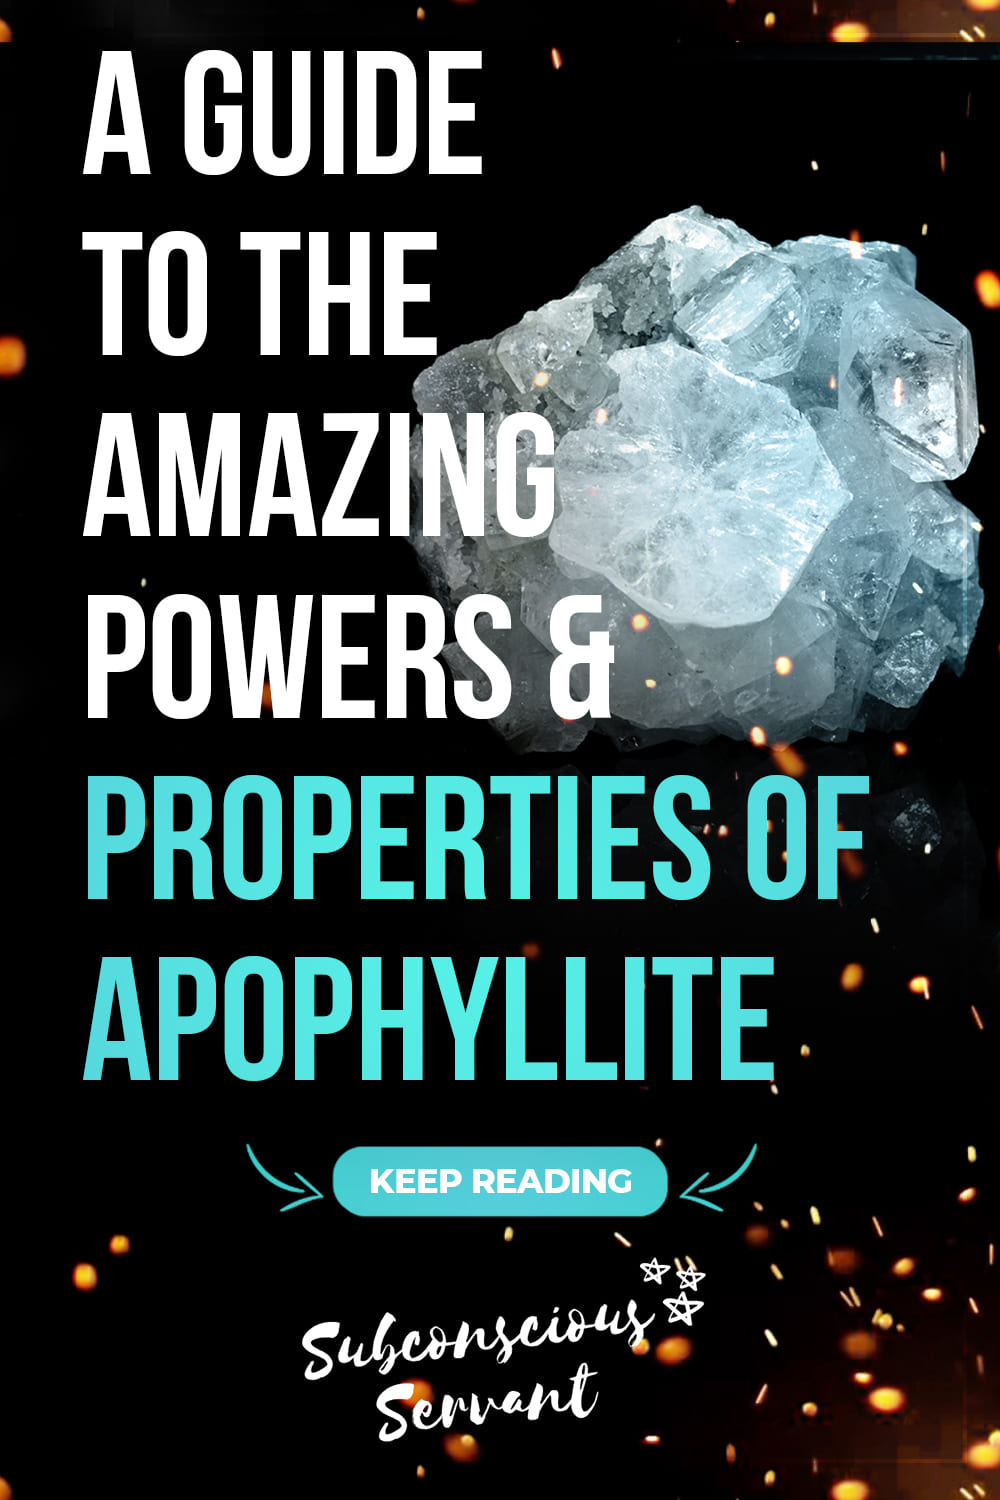 Apophyllite Metaphysical Properties, Benefits, & Everyday Uses